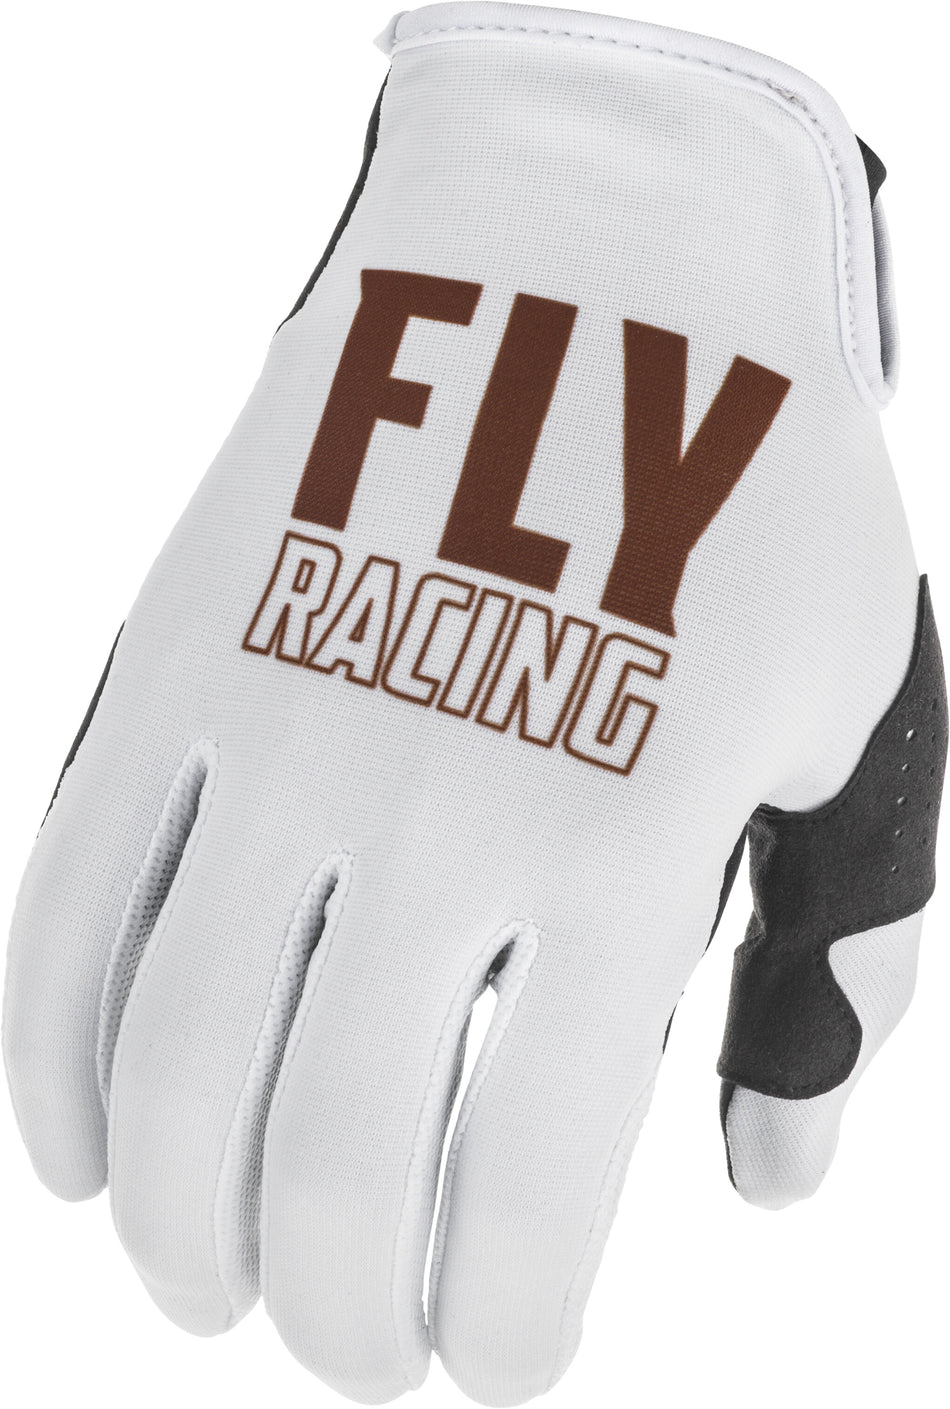 FLY RACING Lite L.E. Gloves White/Copper Sz 13 374-71913